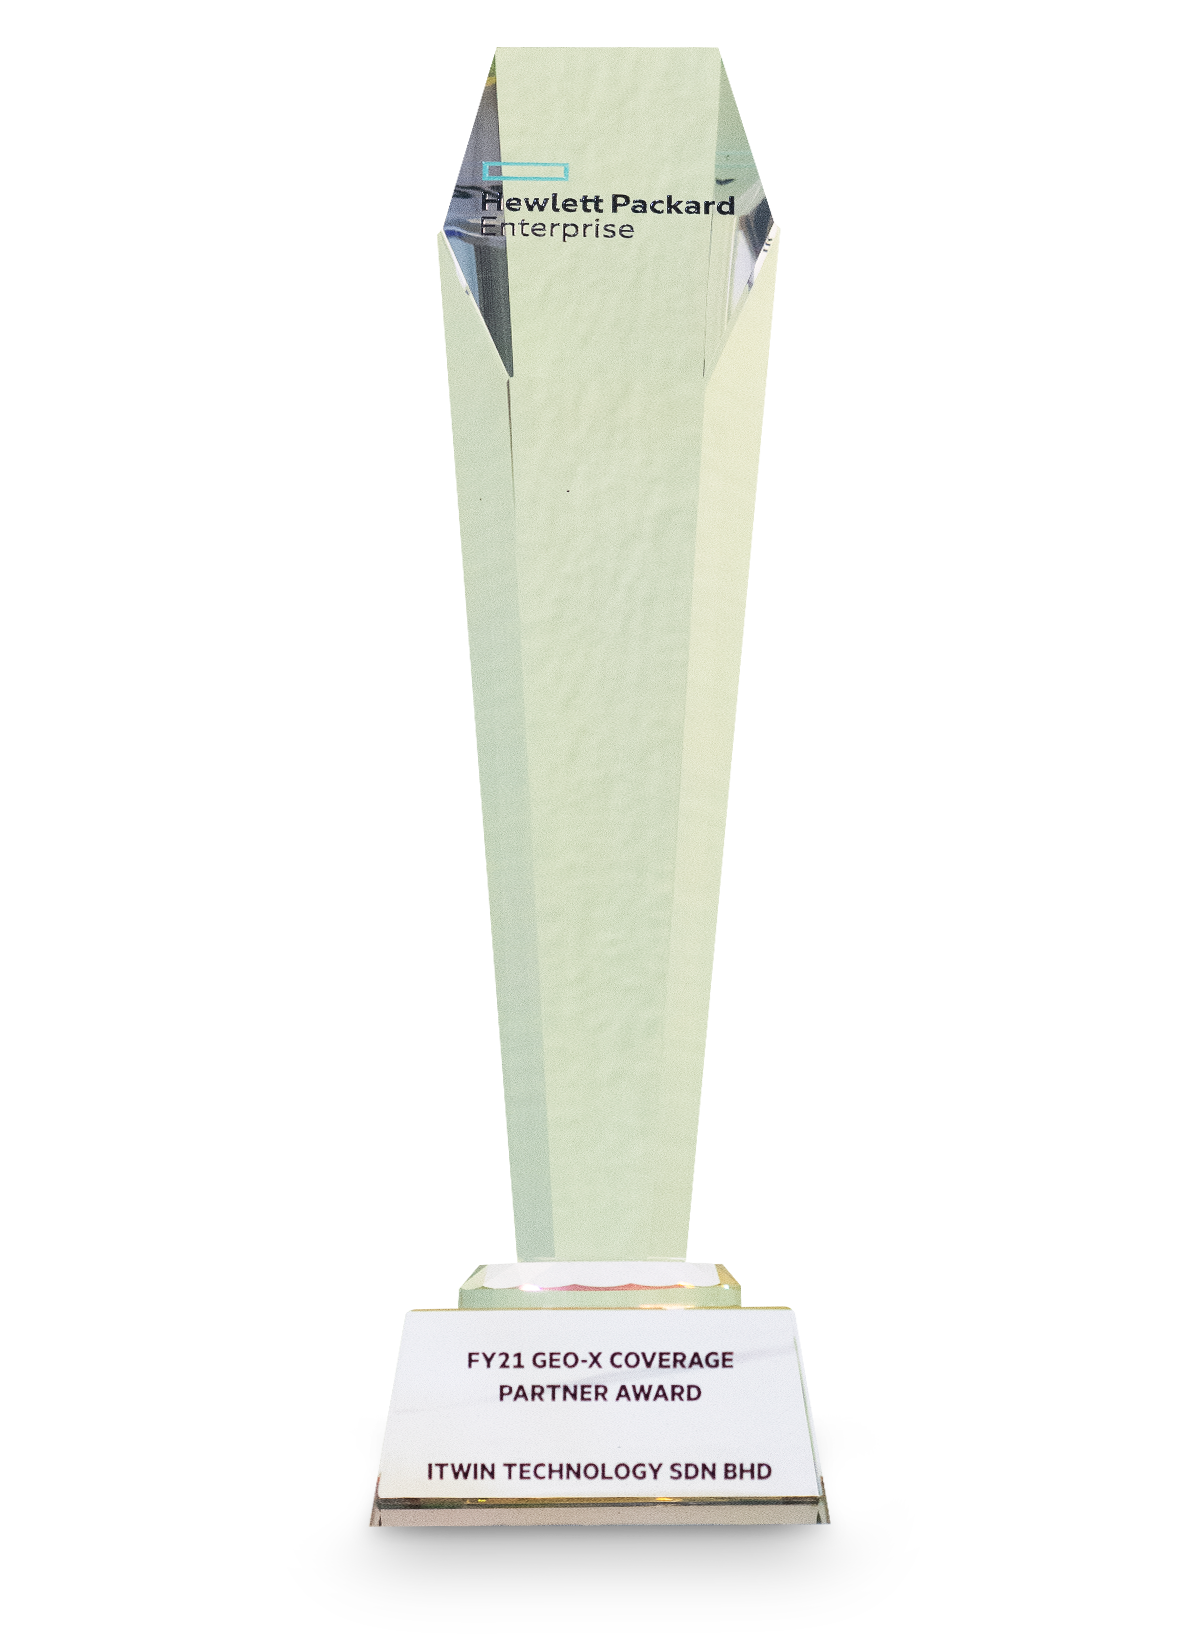 FY21 Best GeoX Coverage Partner Award